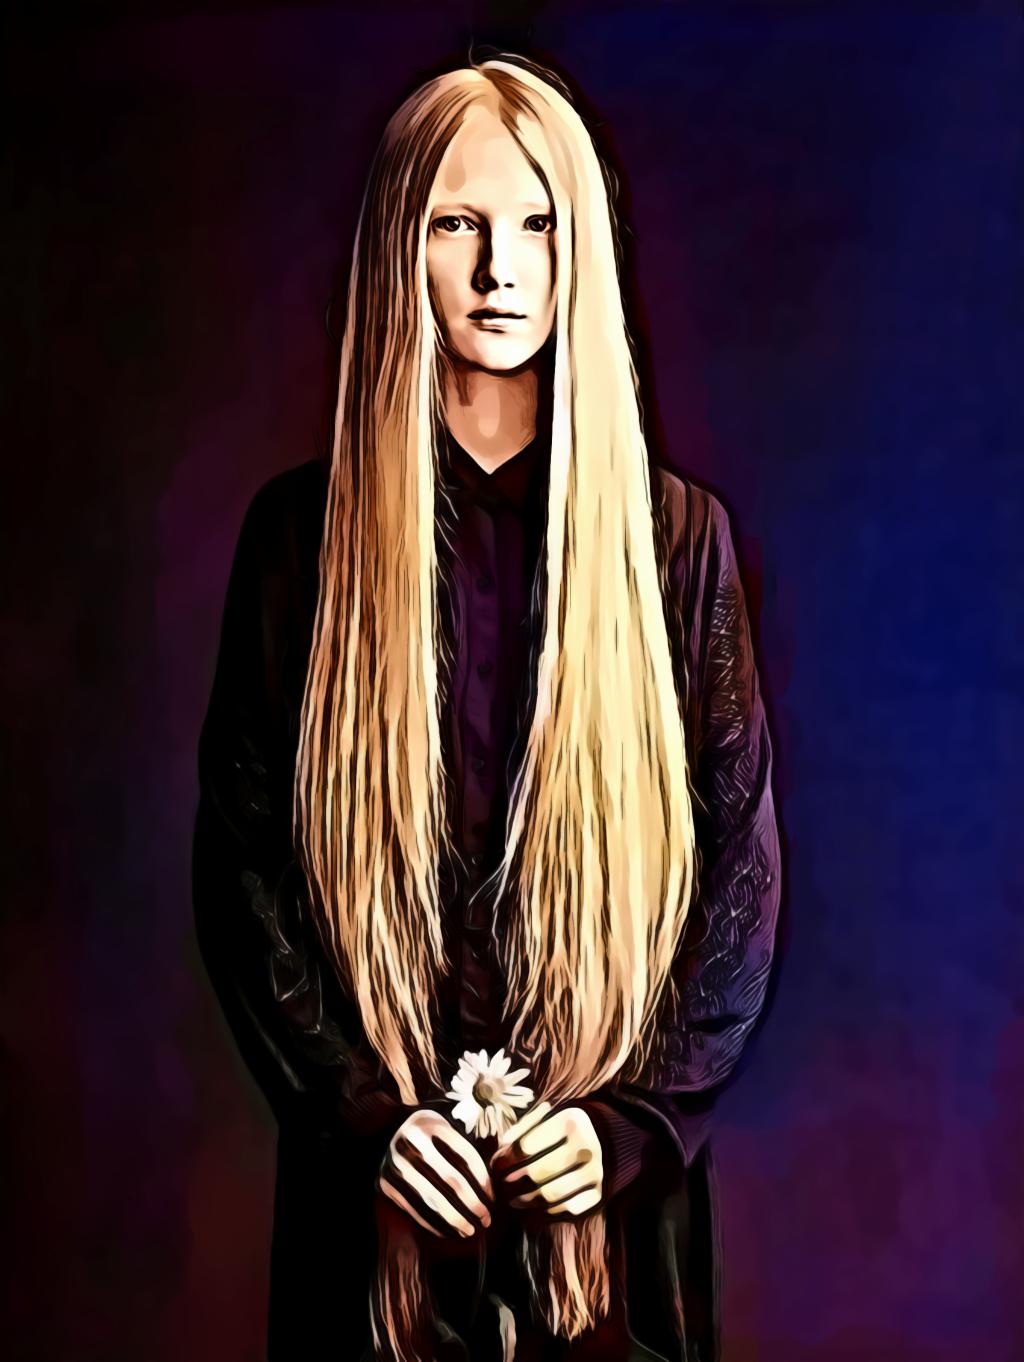 Albino girl with long hair